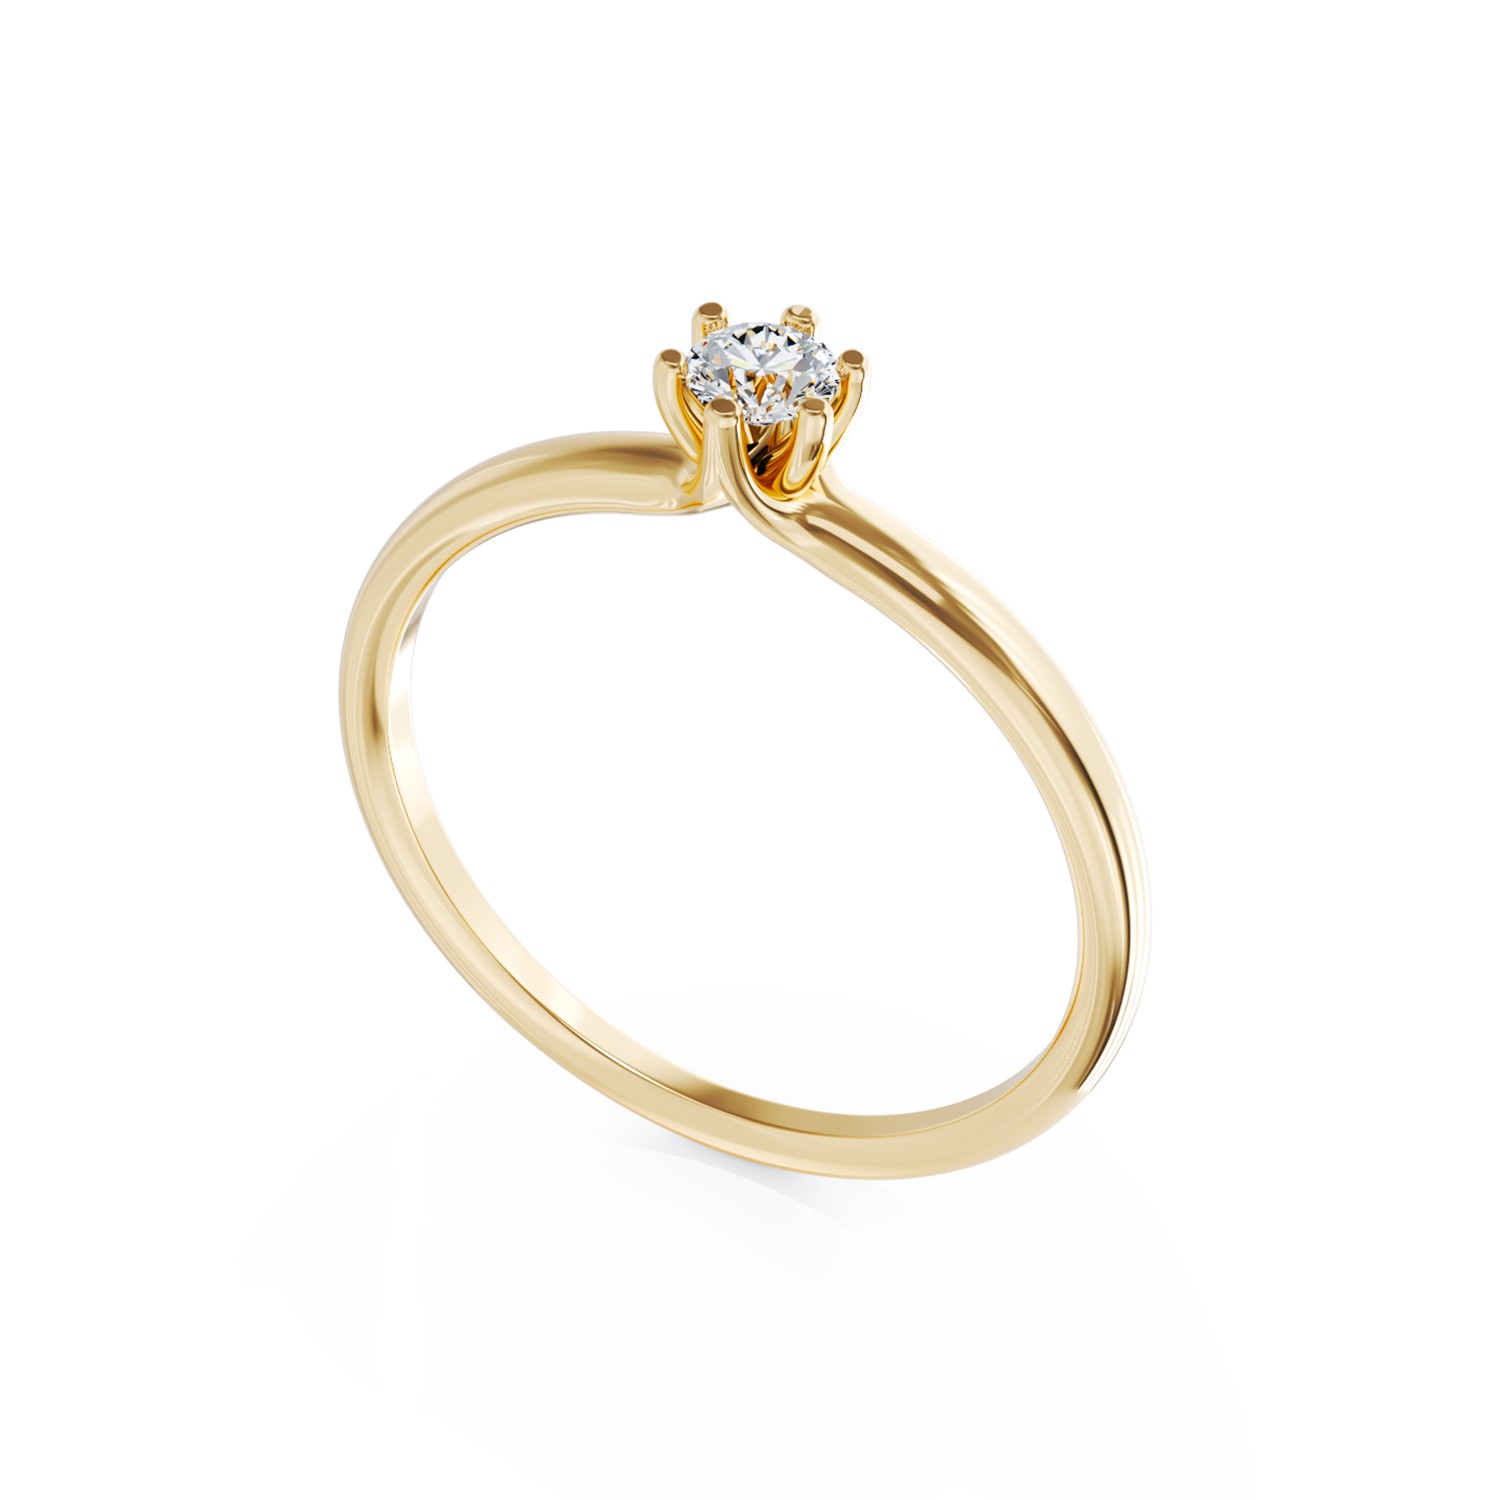 Inel de logodna din aur galben de 18K cu un diamant solitaire de 0.21ct